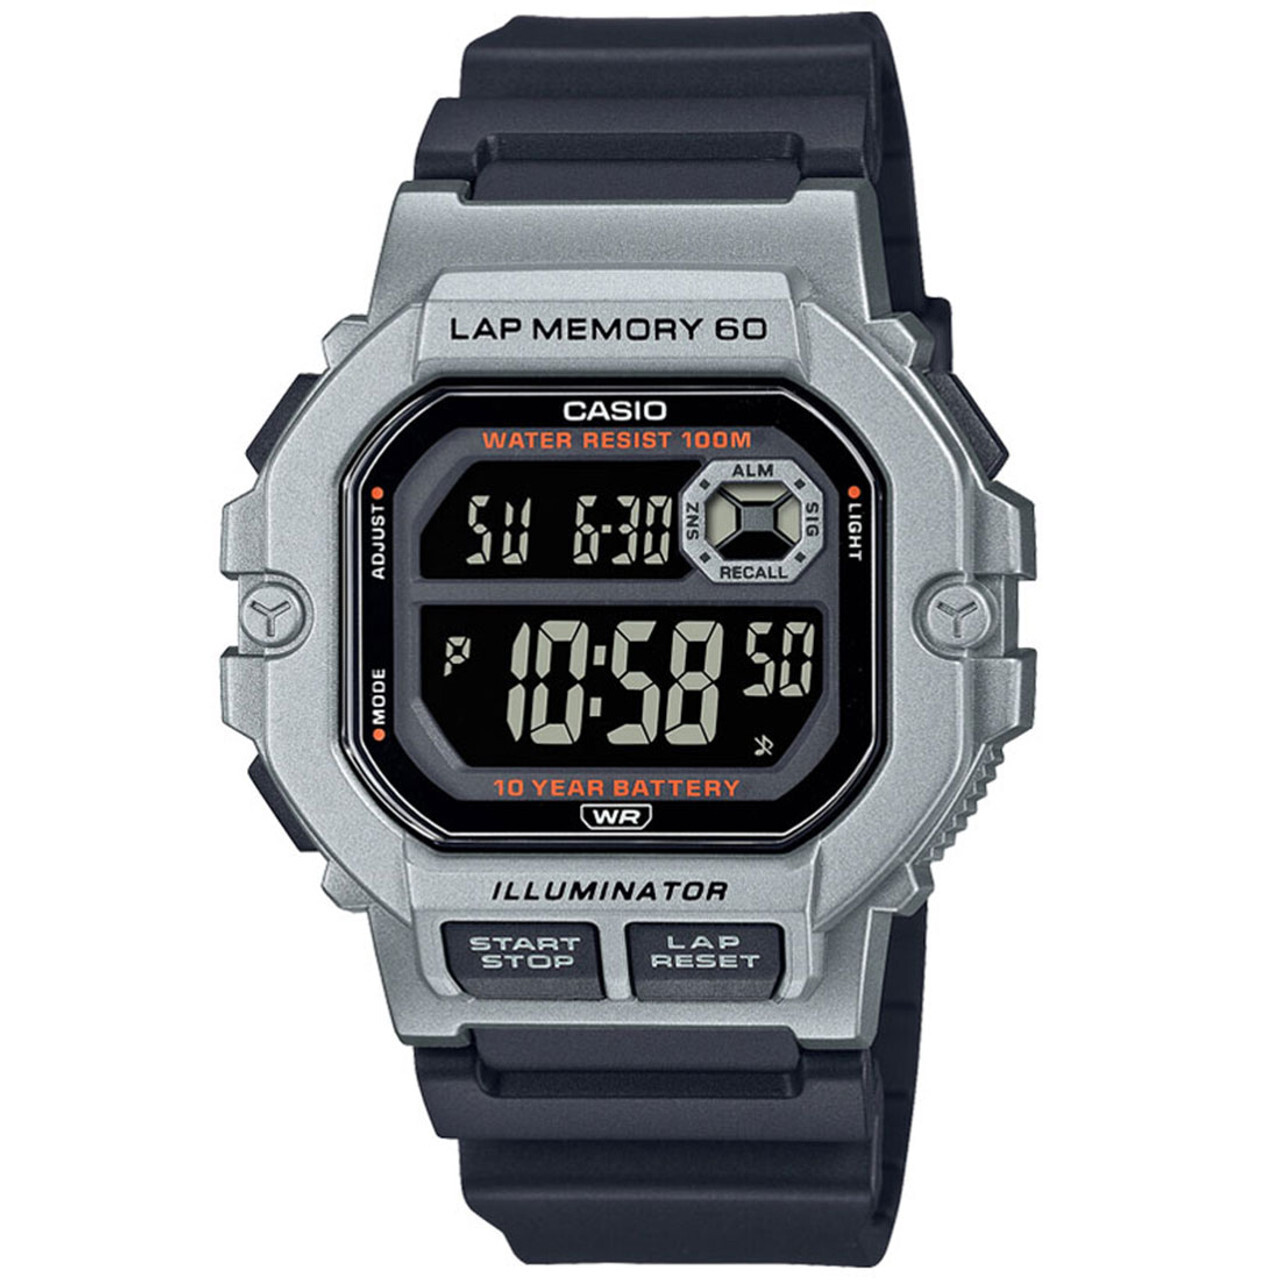 Reloj Casio Runner Series WS-1400H-1bv luz led water resist 100m sport